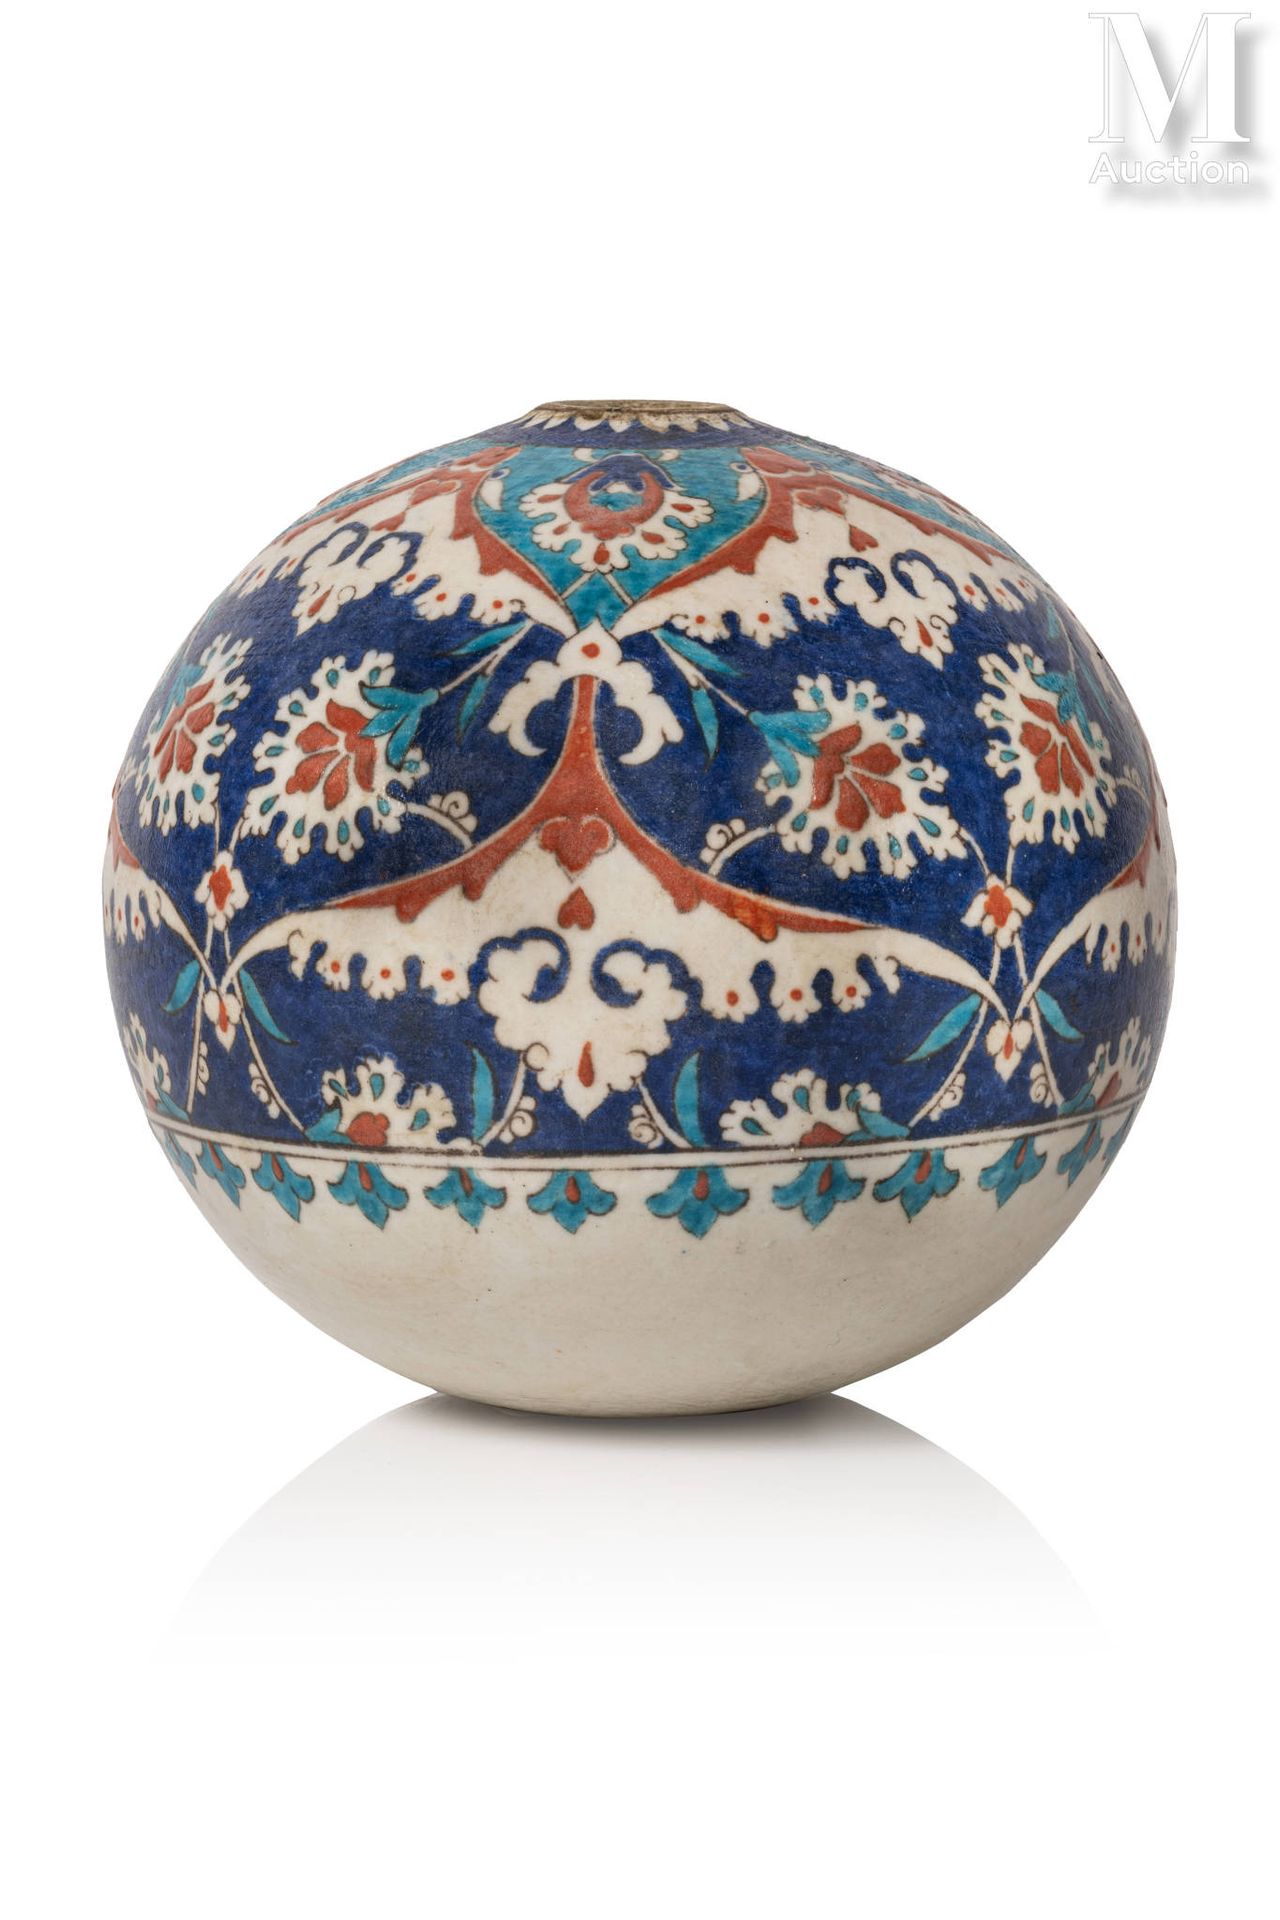 Suspension en forme de sphère 土耳其，伊兹尼克或库塔海亚，16-18世纪
硅质陶瓷的球形构件，在透明的釉面下保留了多色的珐琅彩装饰&hellip;